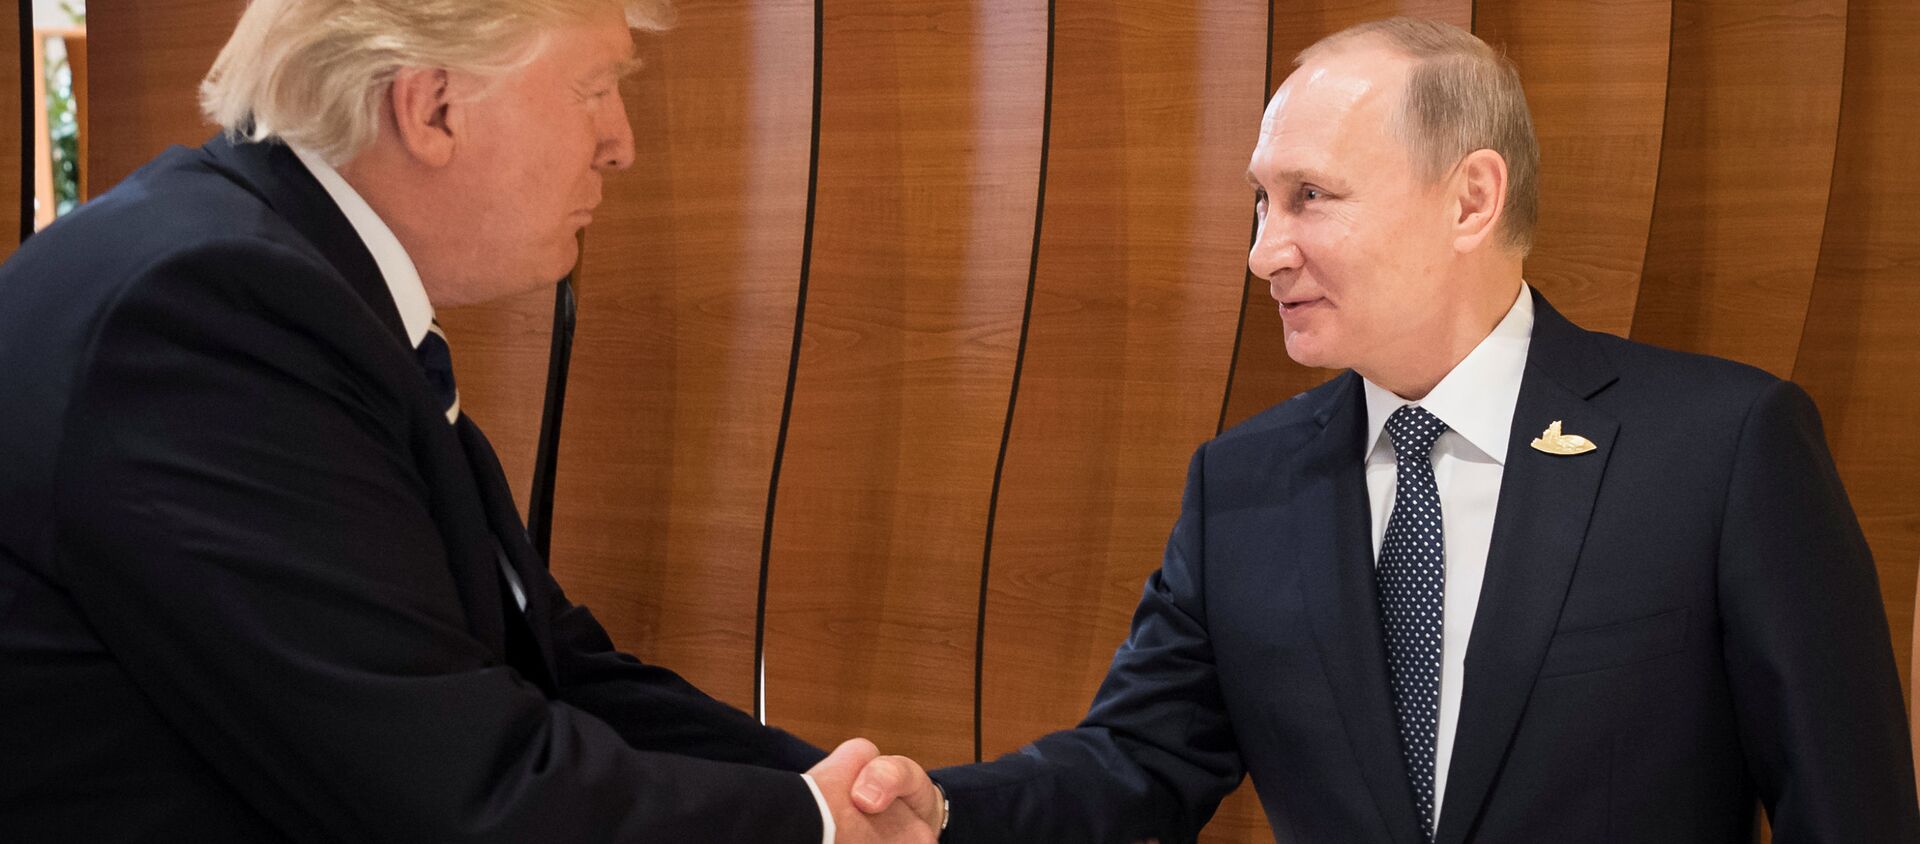 Рукопожатие президента США Дональда Трампа и президента РФ Владимира Путина на саммите G20 в Гамбурге - Sputnik Việt Nam, 1920, 02.11.2020